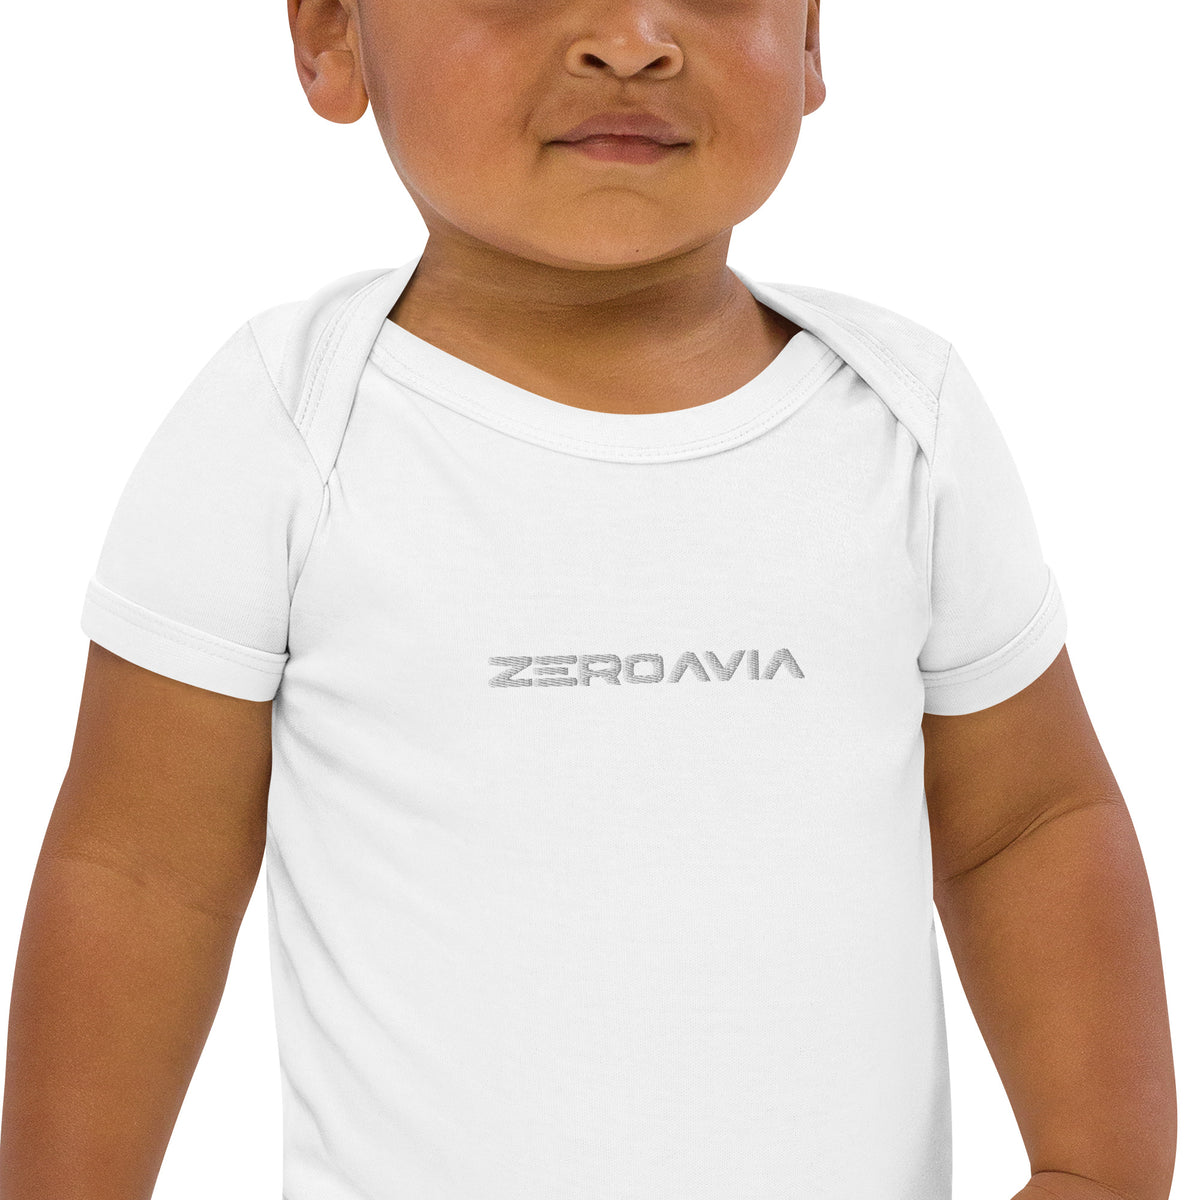 ZeroAvia Baby Bodysuit